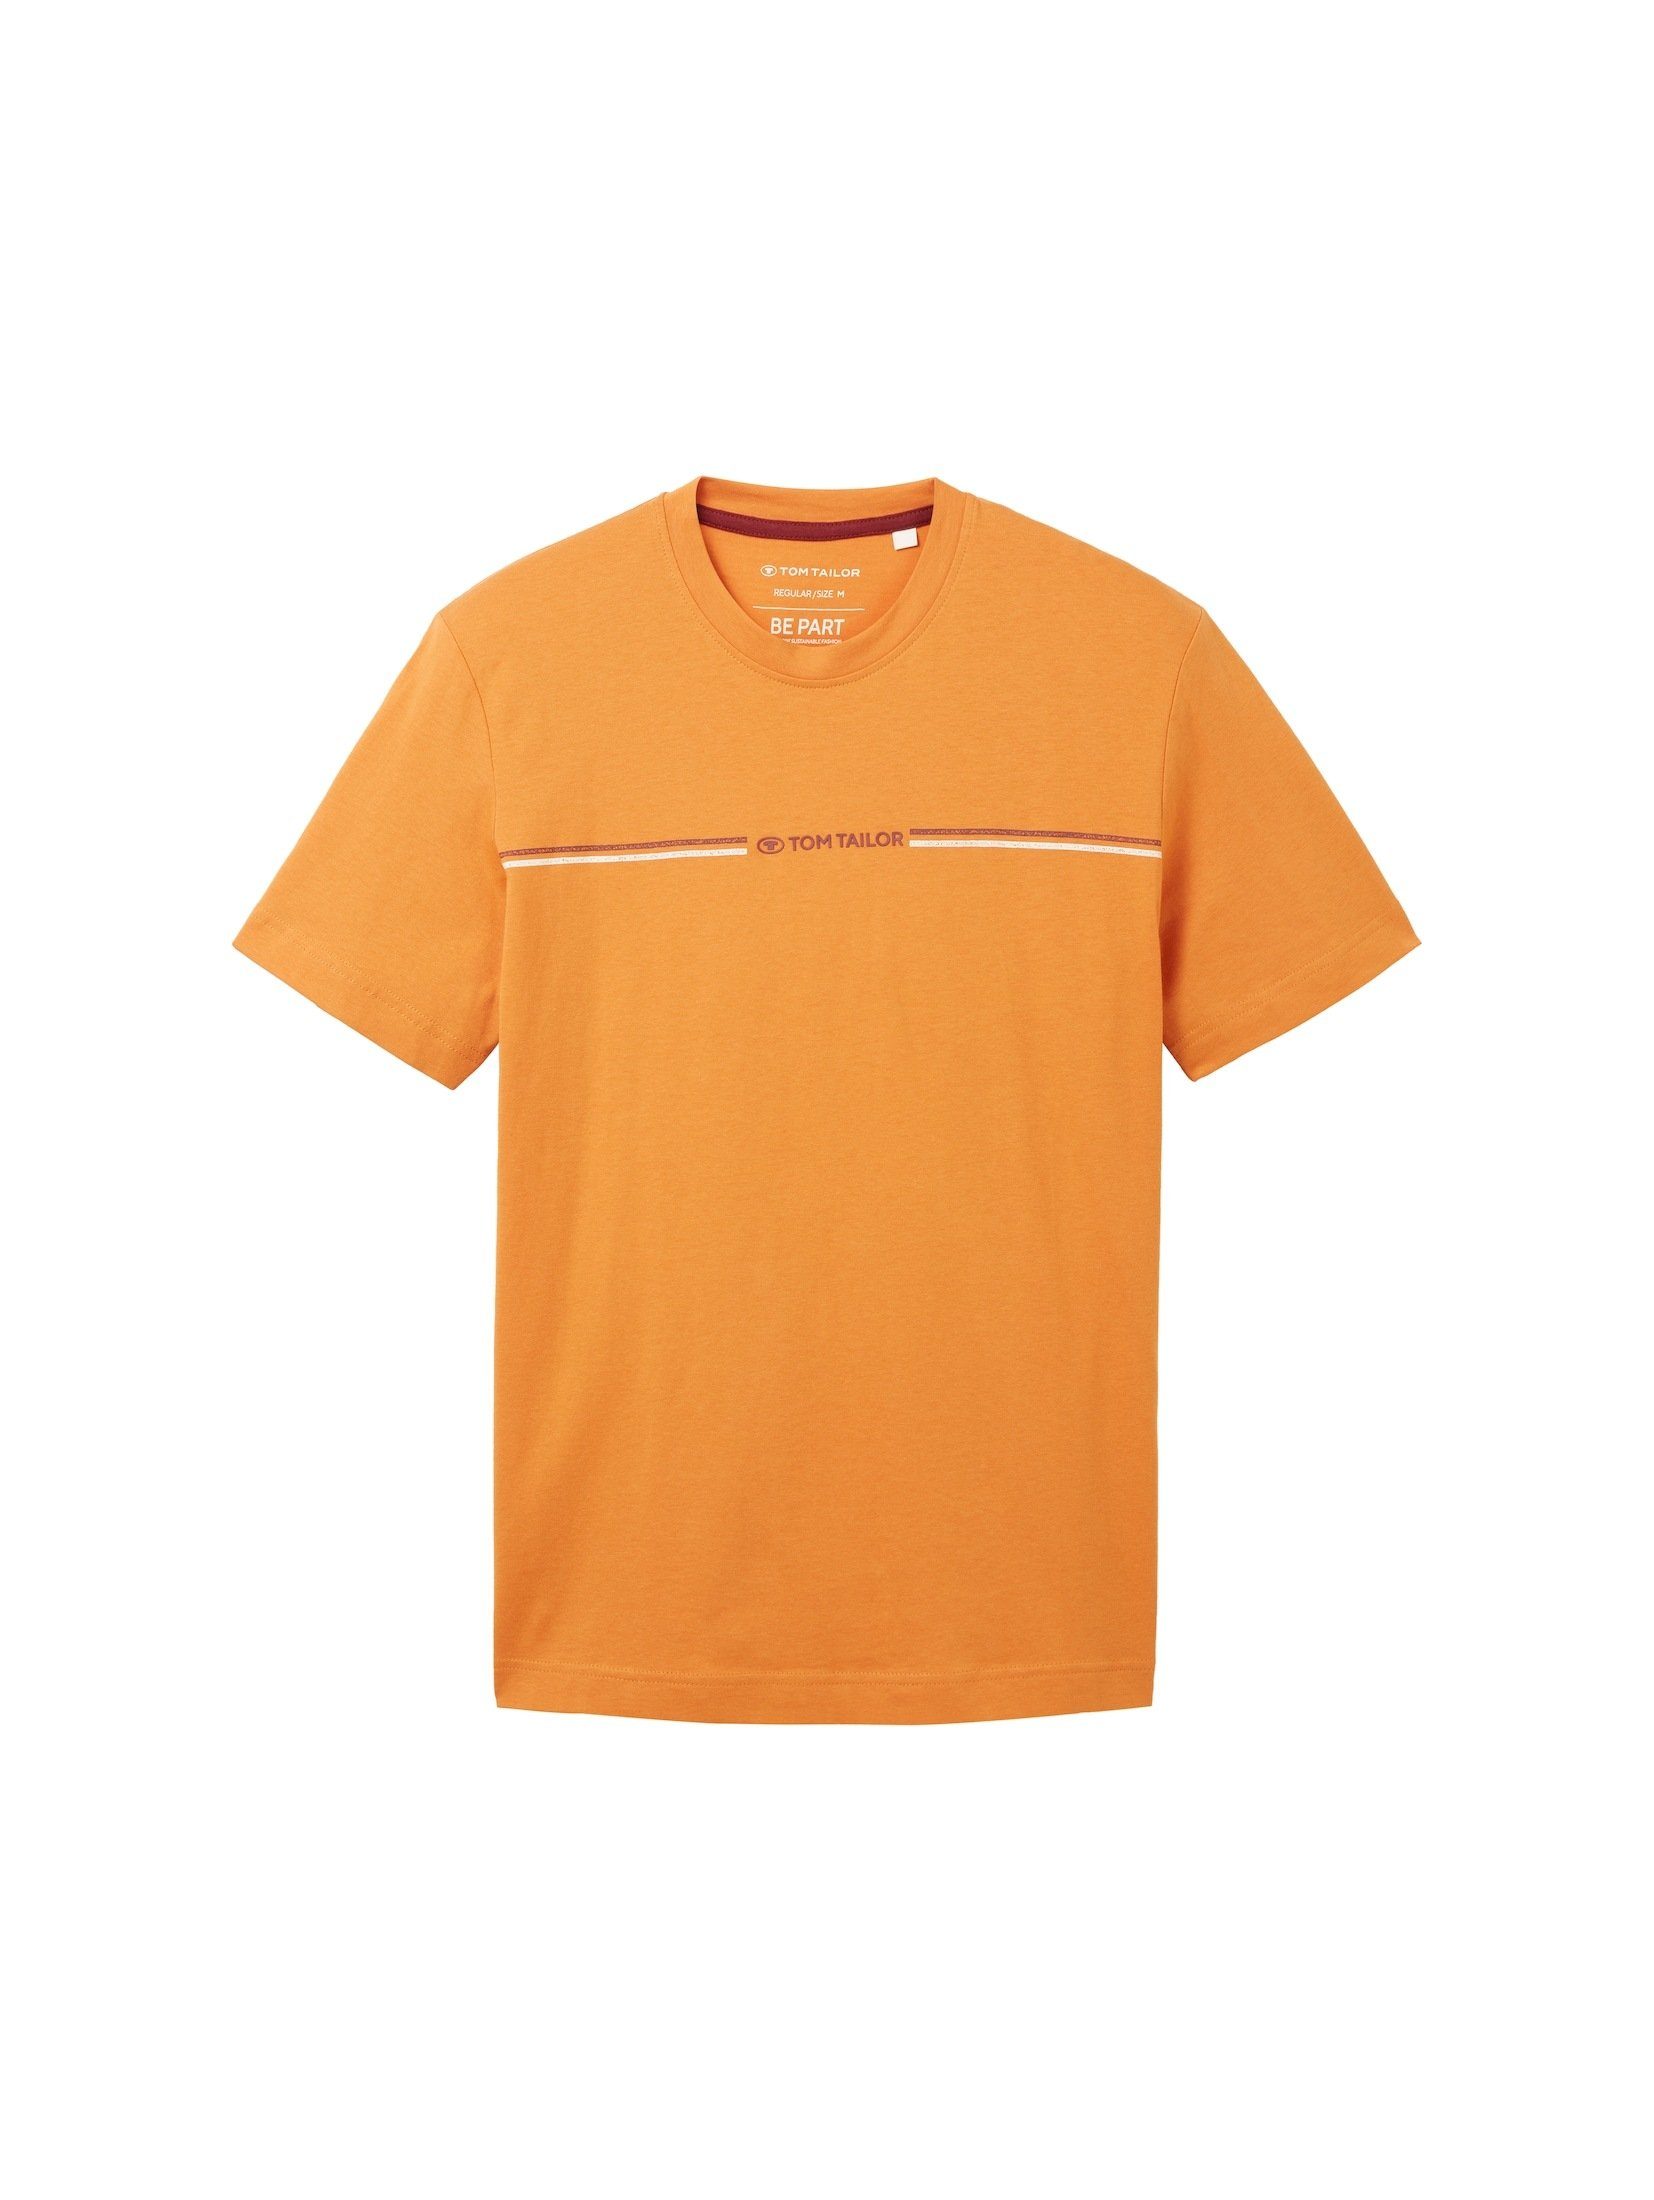 TOM TAILOR T-Shirt Print cream mit tomato T-Shirt orange